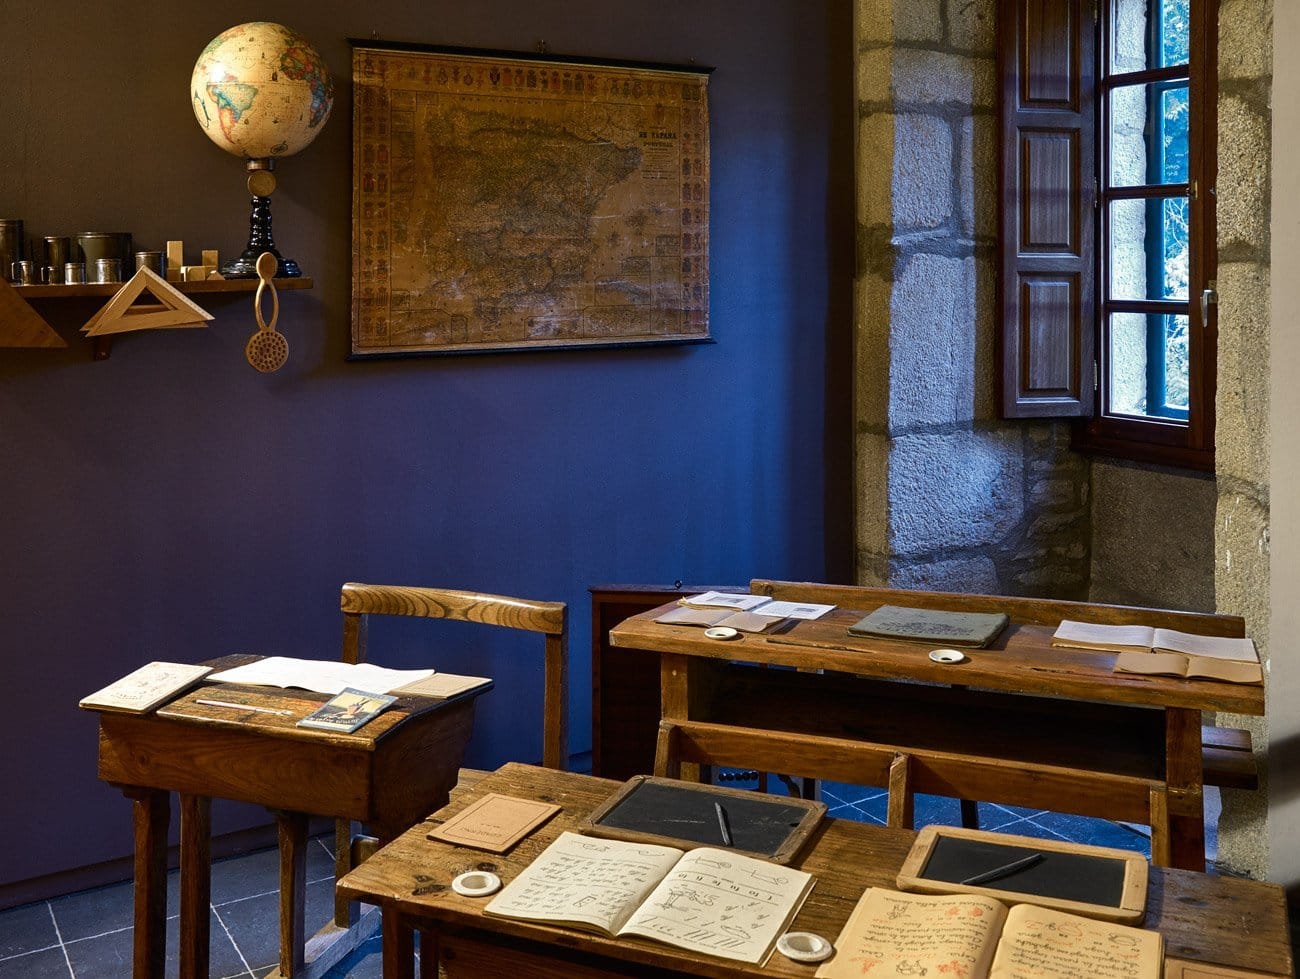 Museo do Pobo Galego: las raíces de Galicia